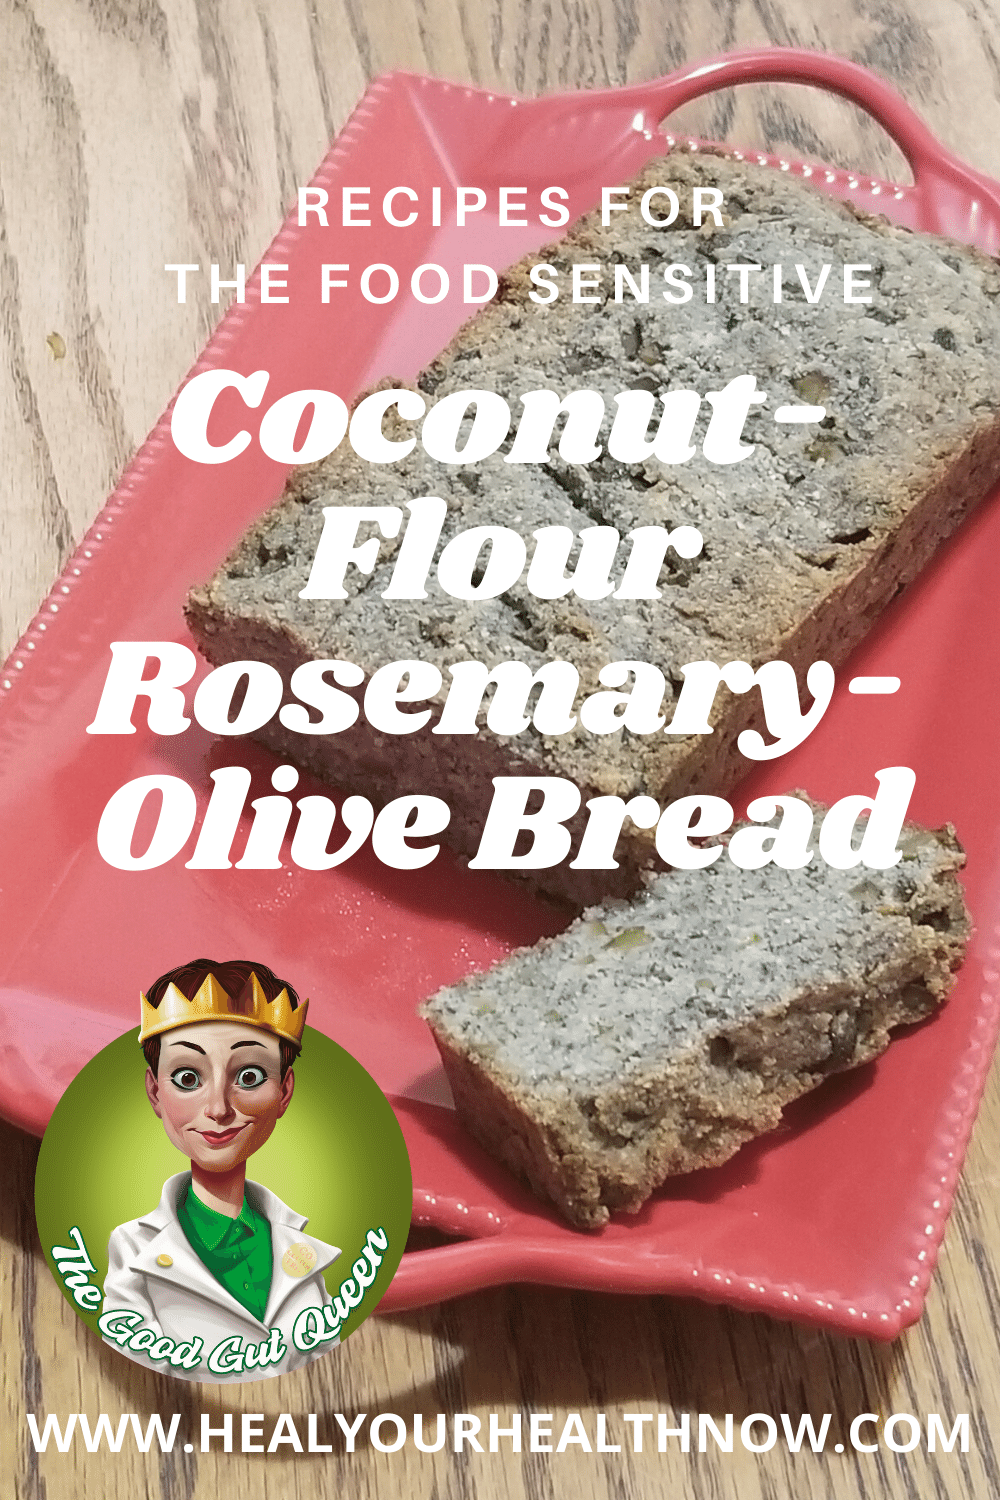 Coconut-Flour Rosemary-Olive Bread